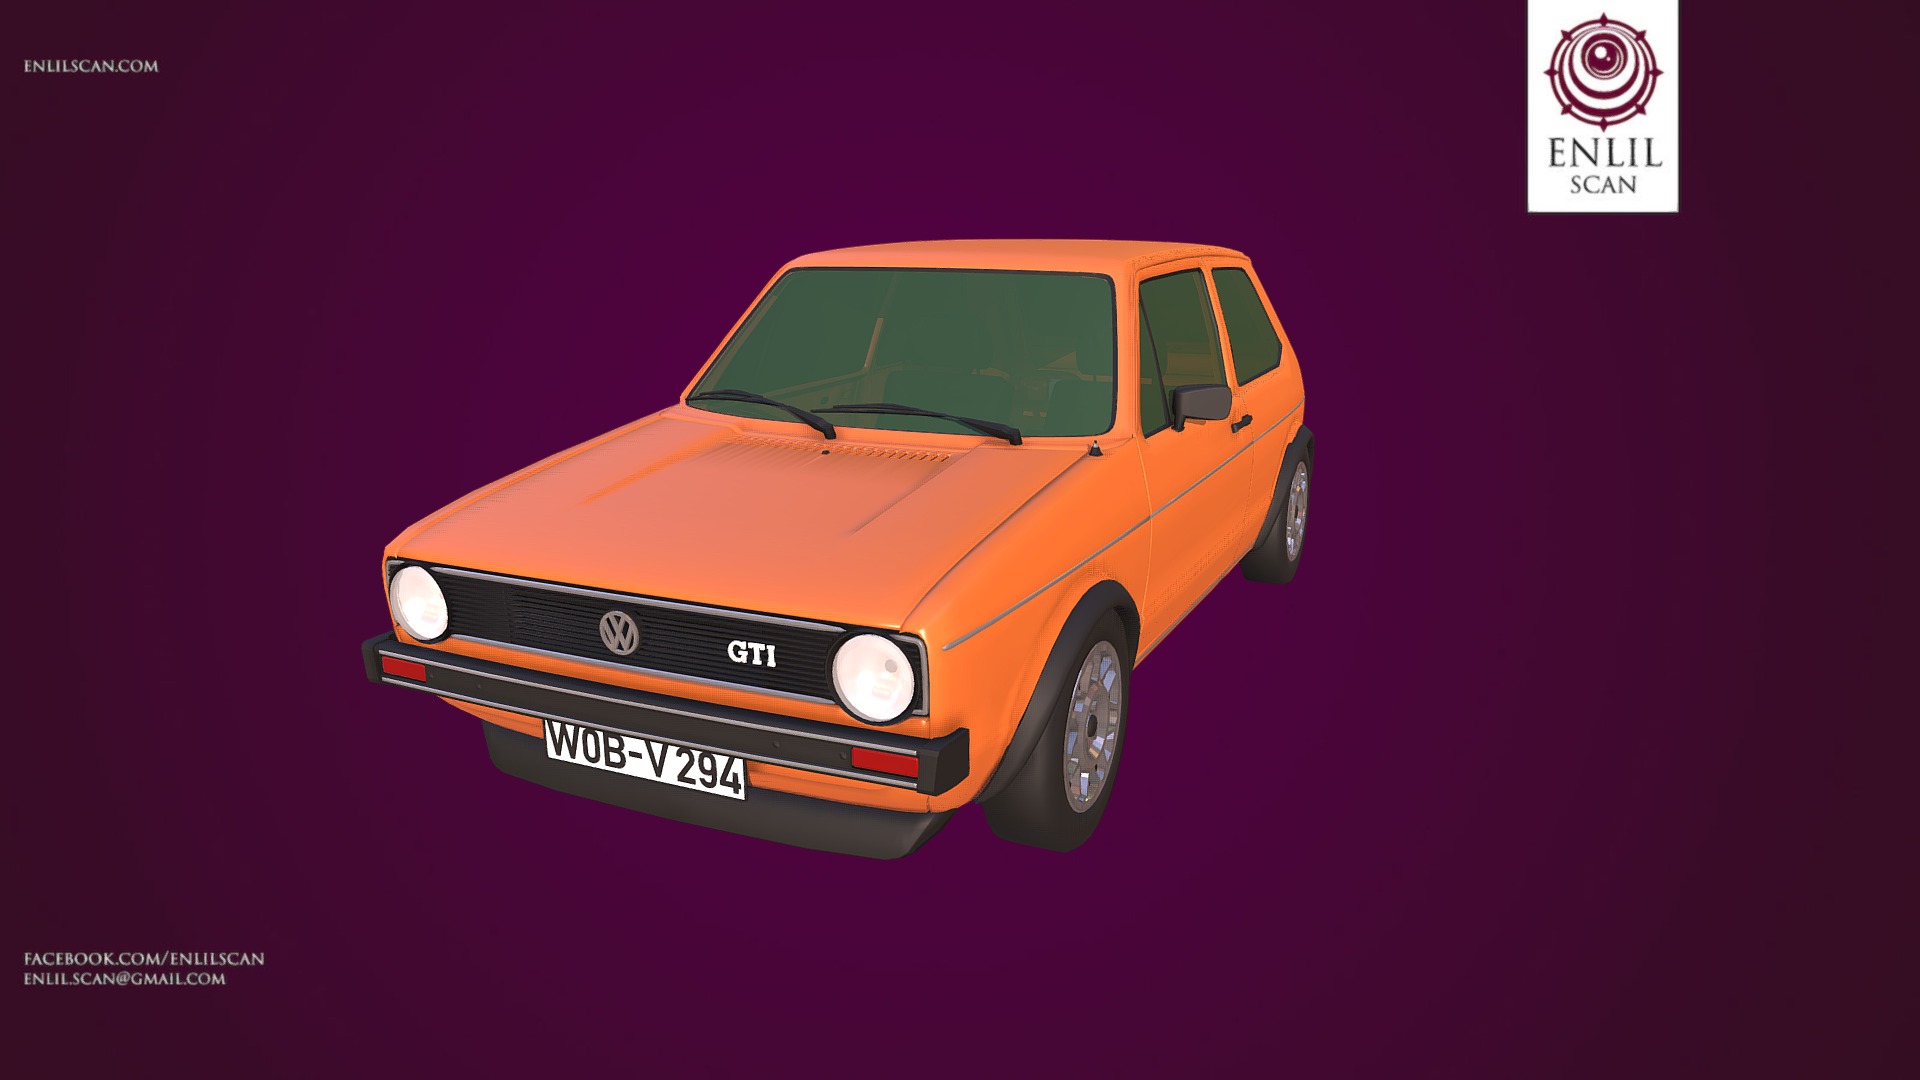 3D model Volkswagen Golf Mk 1 - This is a 3D model of the Volkswagen Golf Mk 1. The 3D model is about a small orange car.